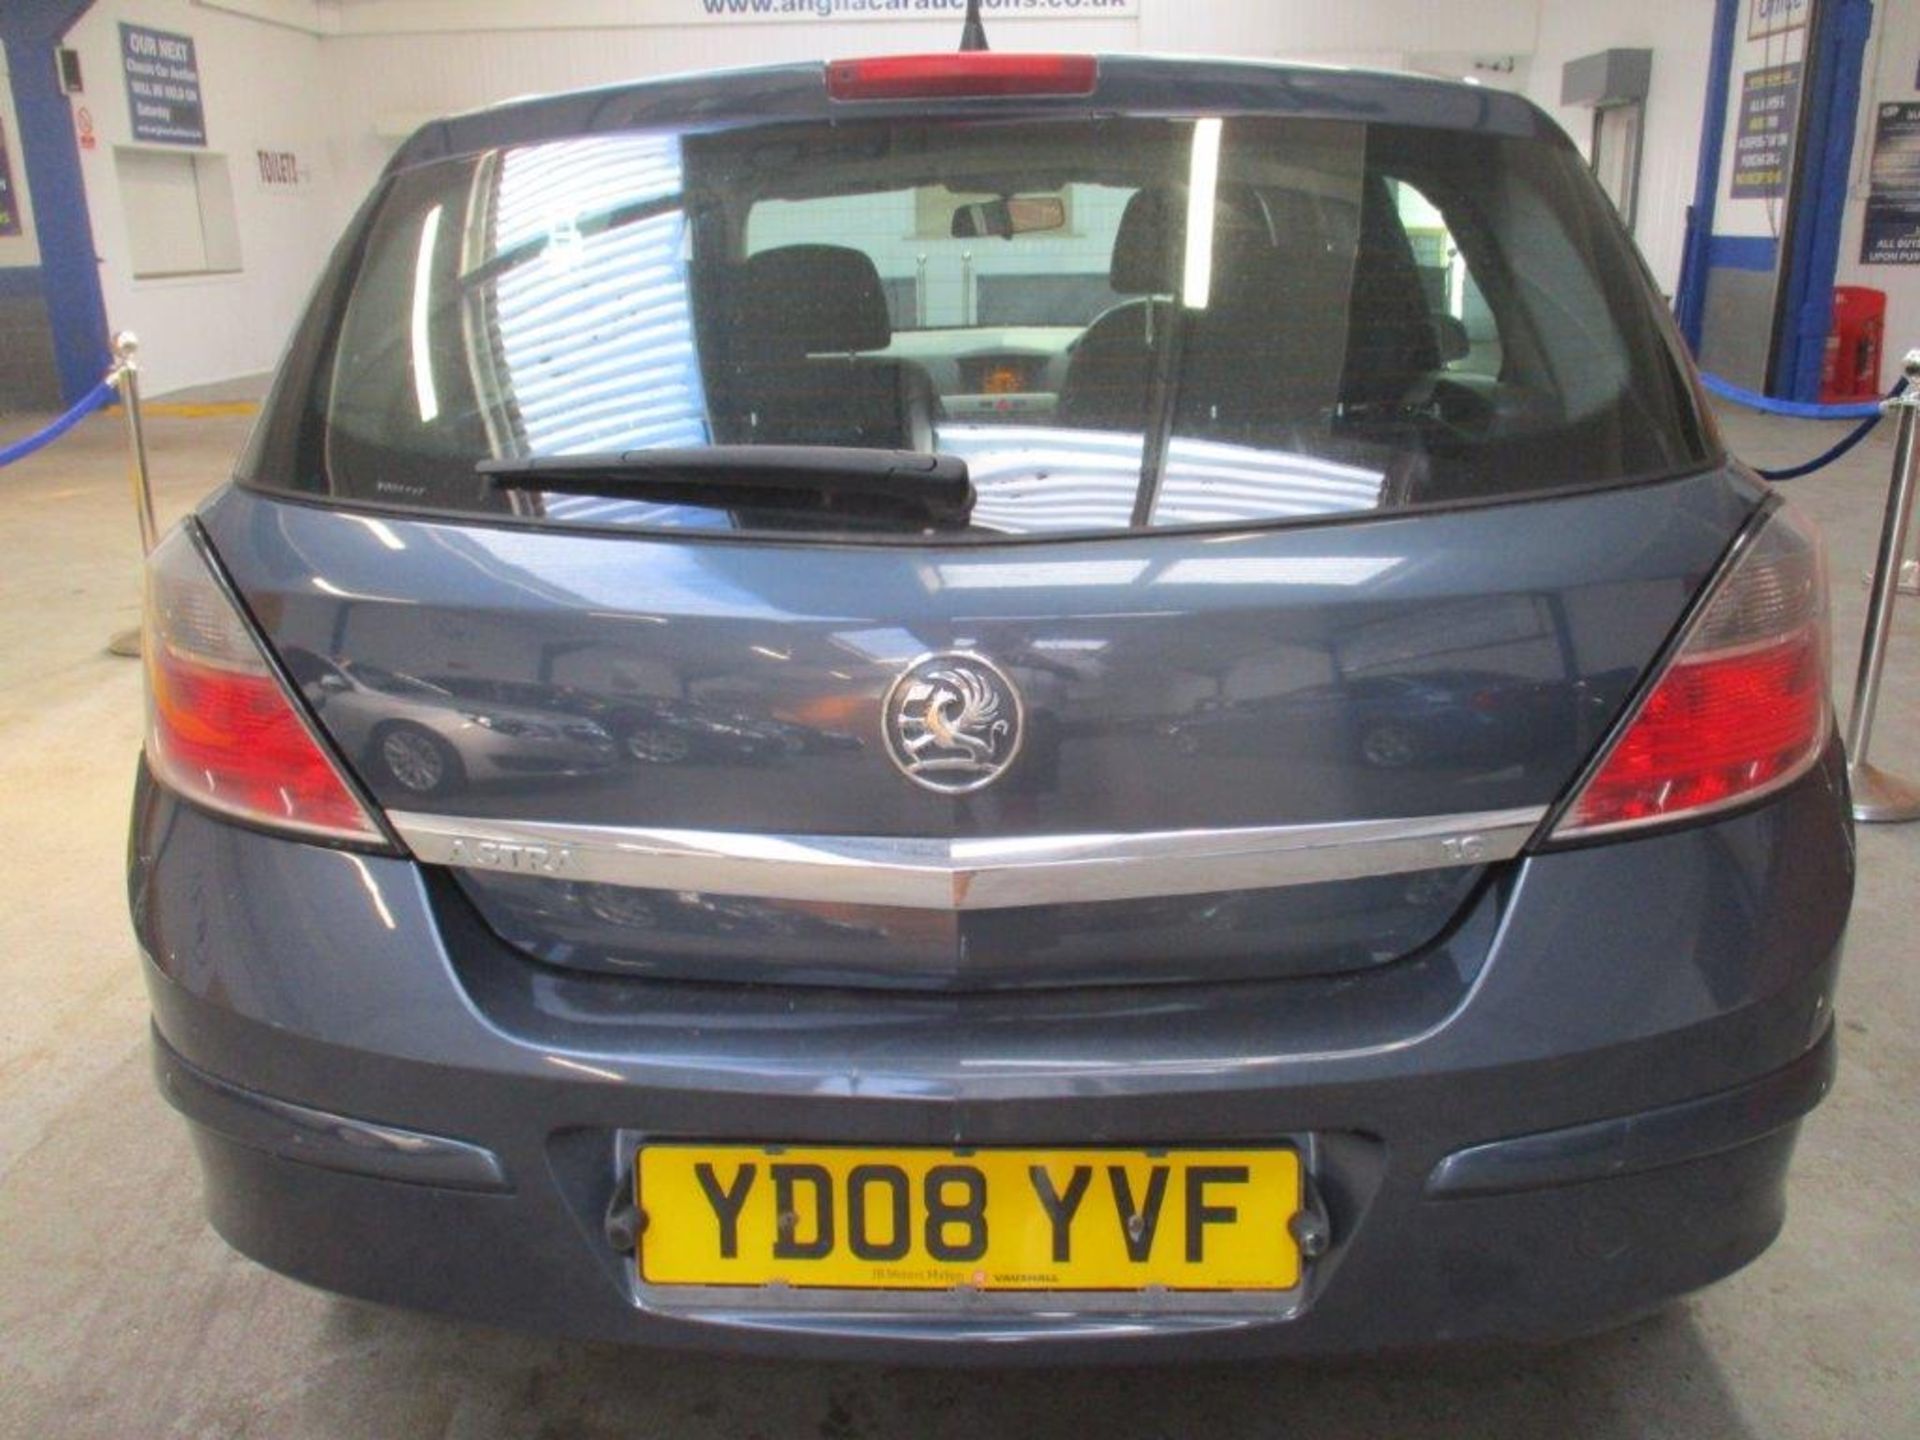 08 08 Vauxhall Astra Breeze - Image 5 of 18